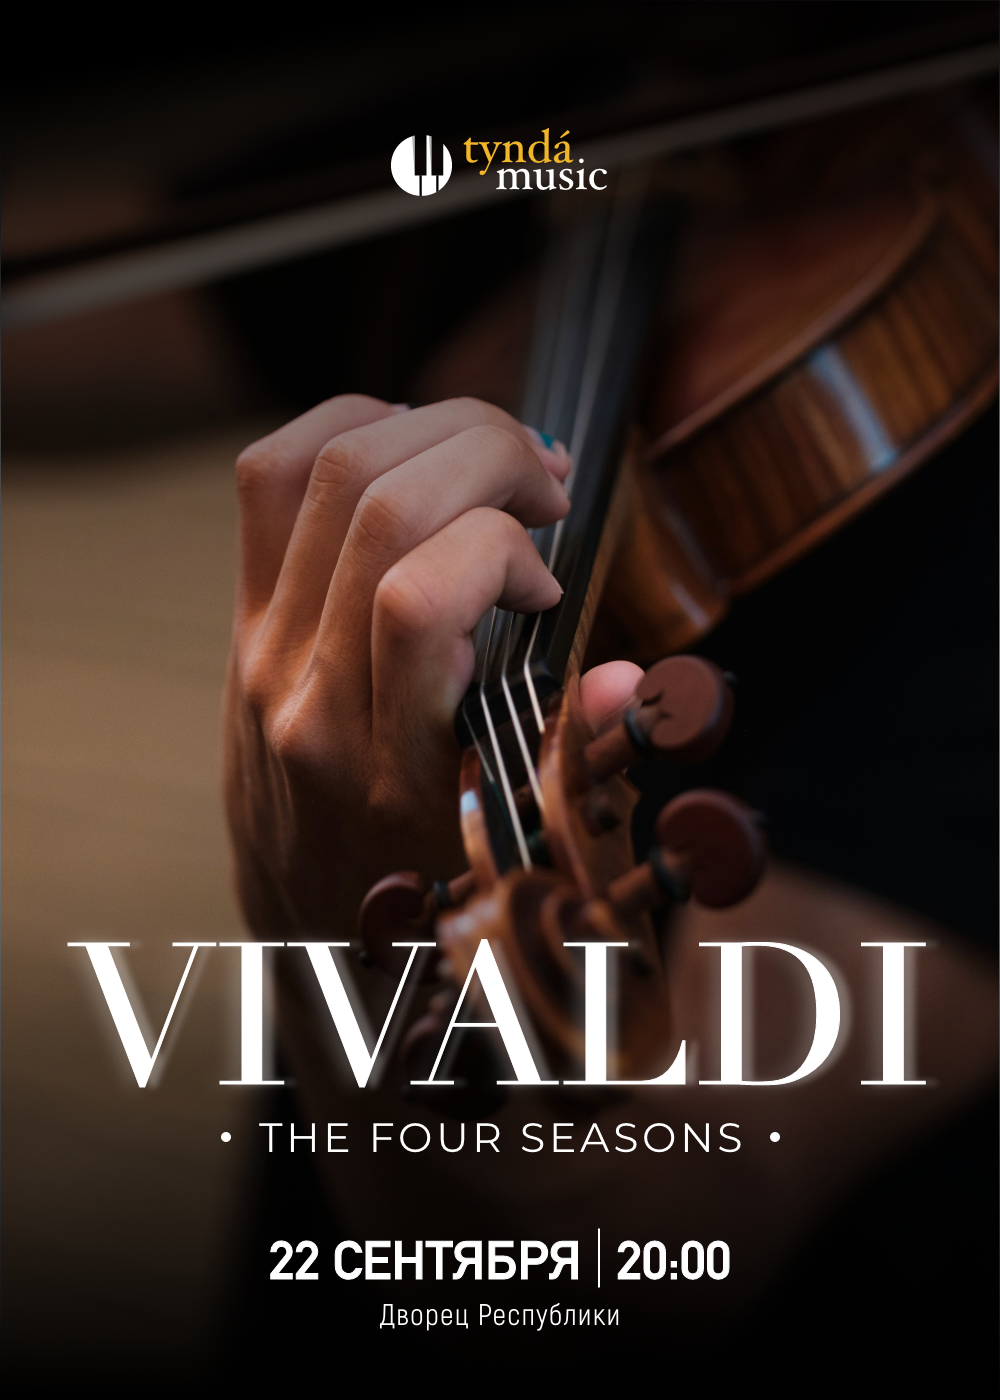 TyndaMusic - Vivaldi. Four seasons в Алматы